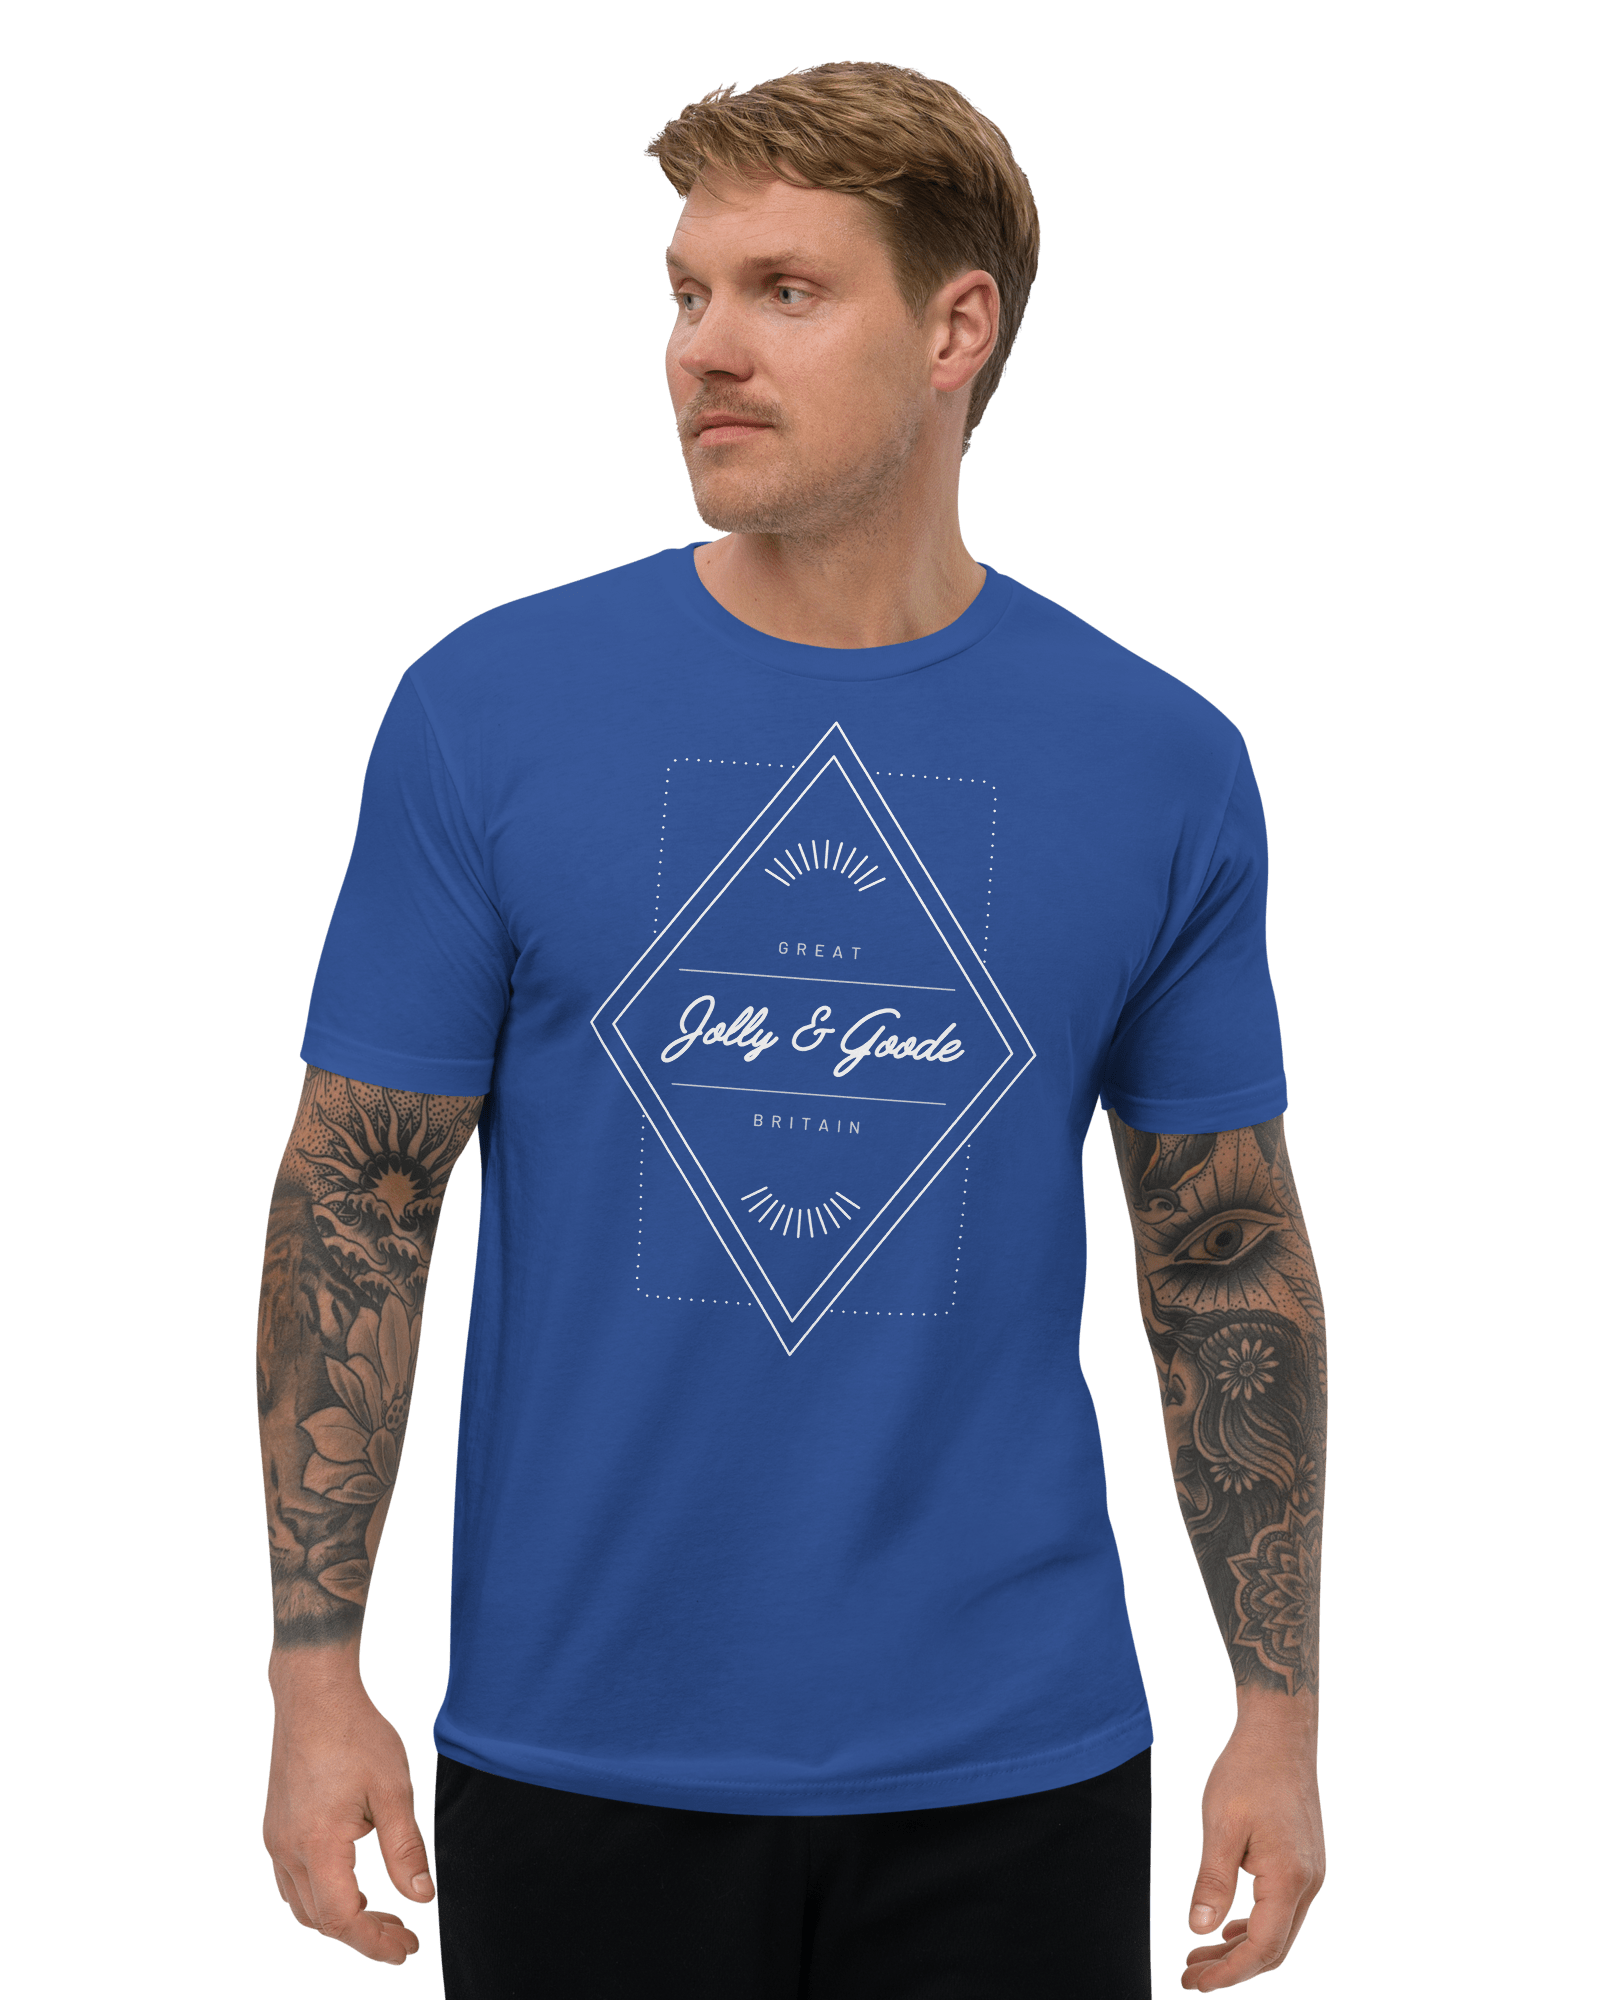 Jolly & Goode Diamond Men's Fitted T-shirt Royal Blue / XS Jolly & Goode